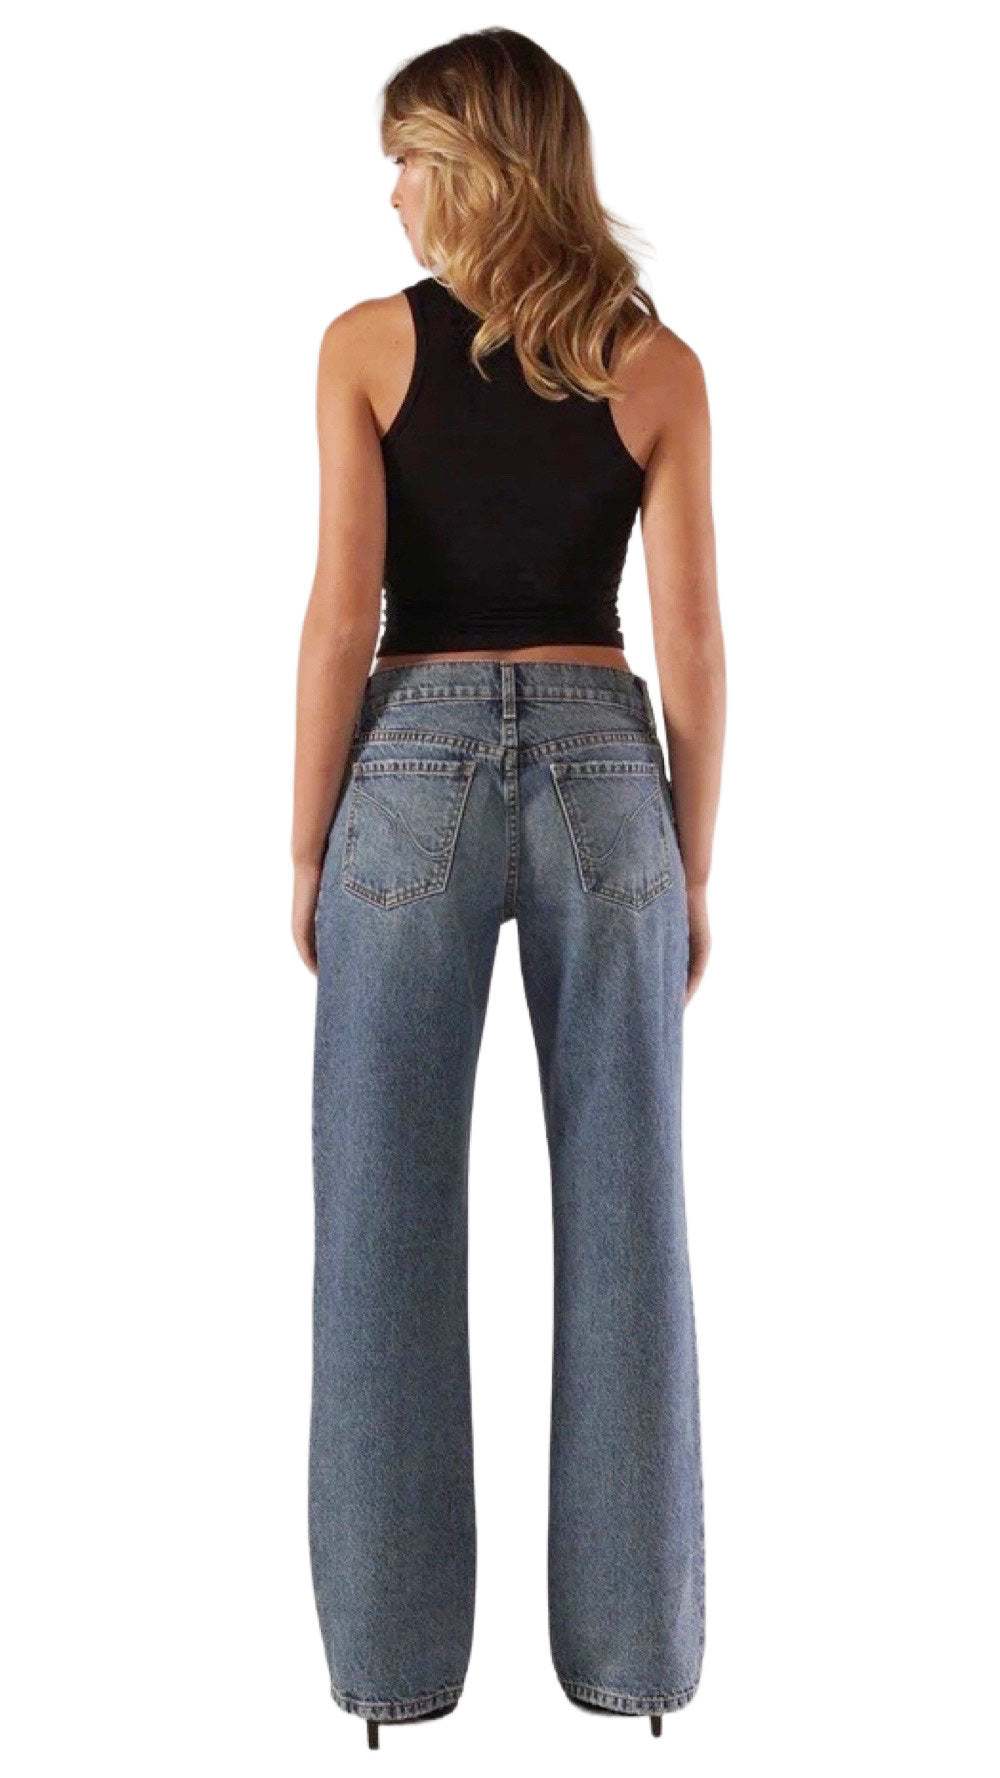 REVICE Denim Women Sz 32 Light Wash Star Back Skinny high Rise front pleat  jeans | eBay